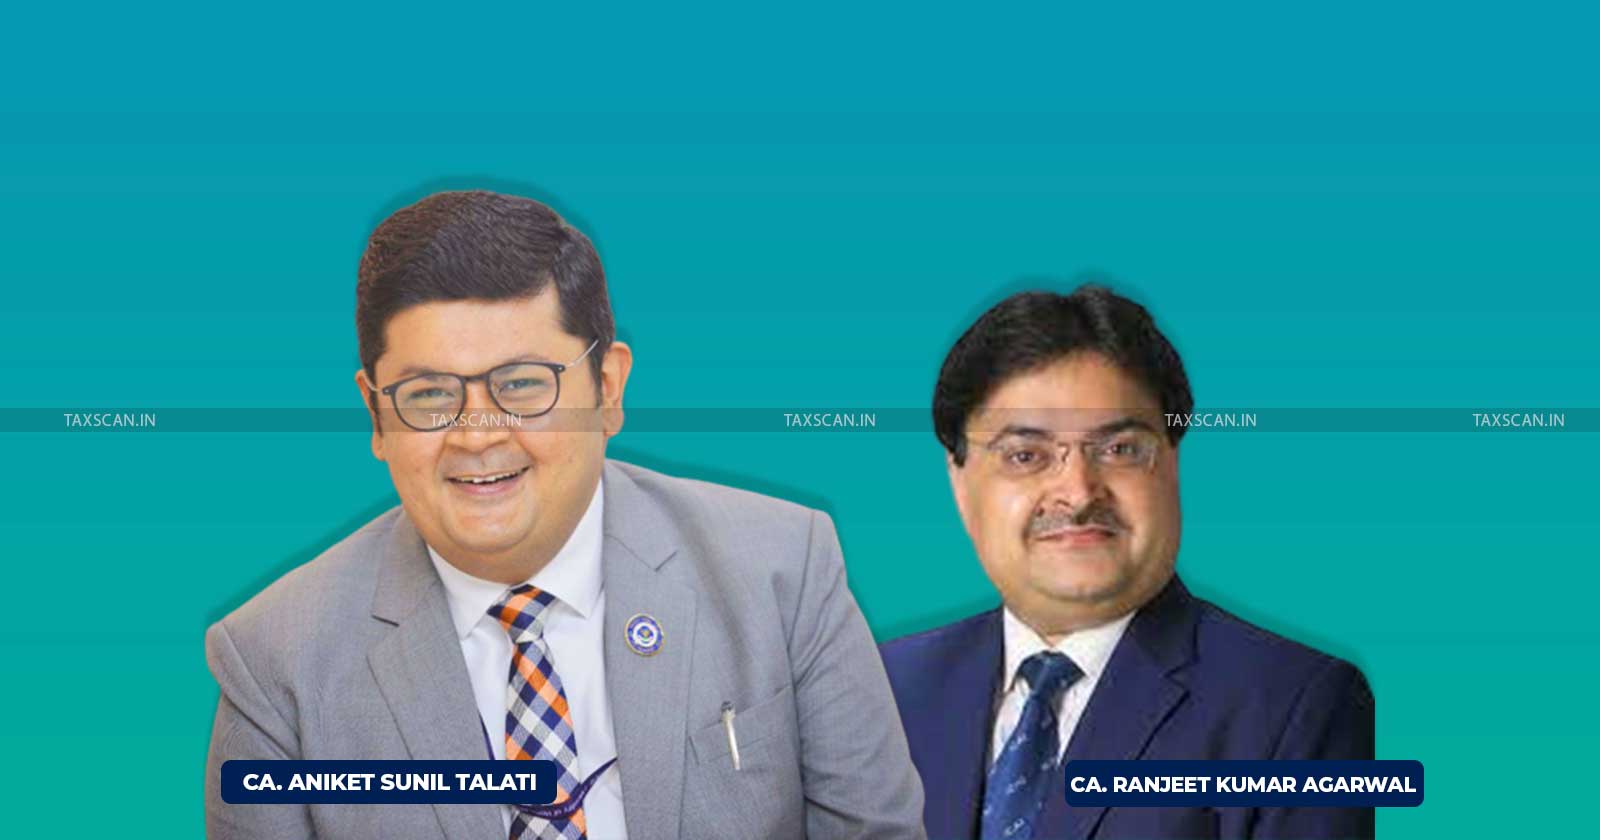 CA. Aniket Sunil Talati - New President - President - ICAI - New President of ICAI - ICAI New President - CA - Chartered Accountant - Taxscan